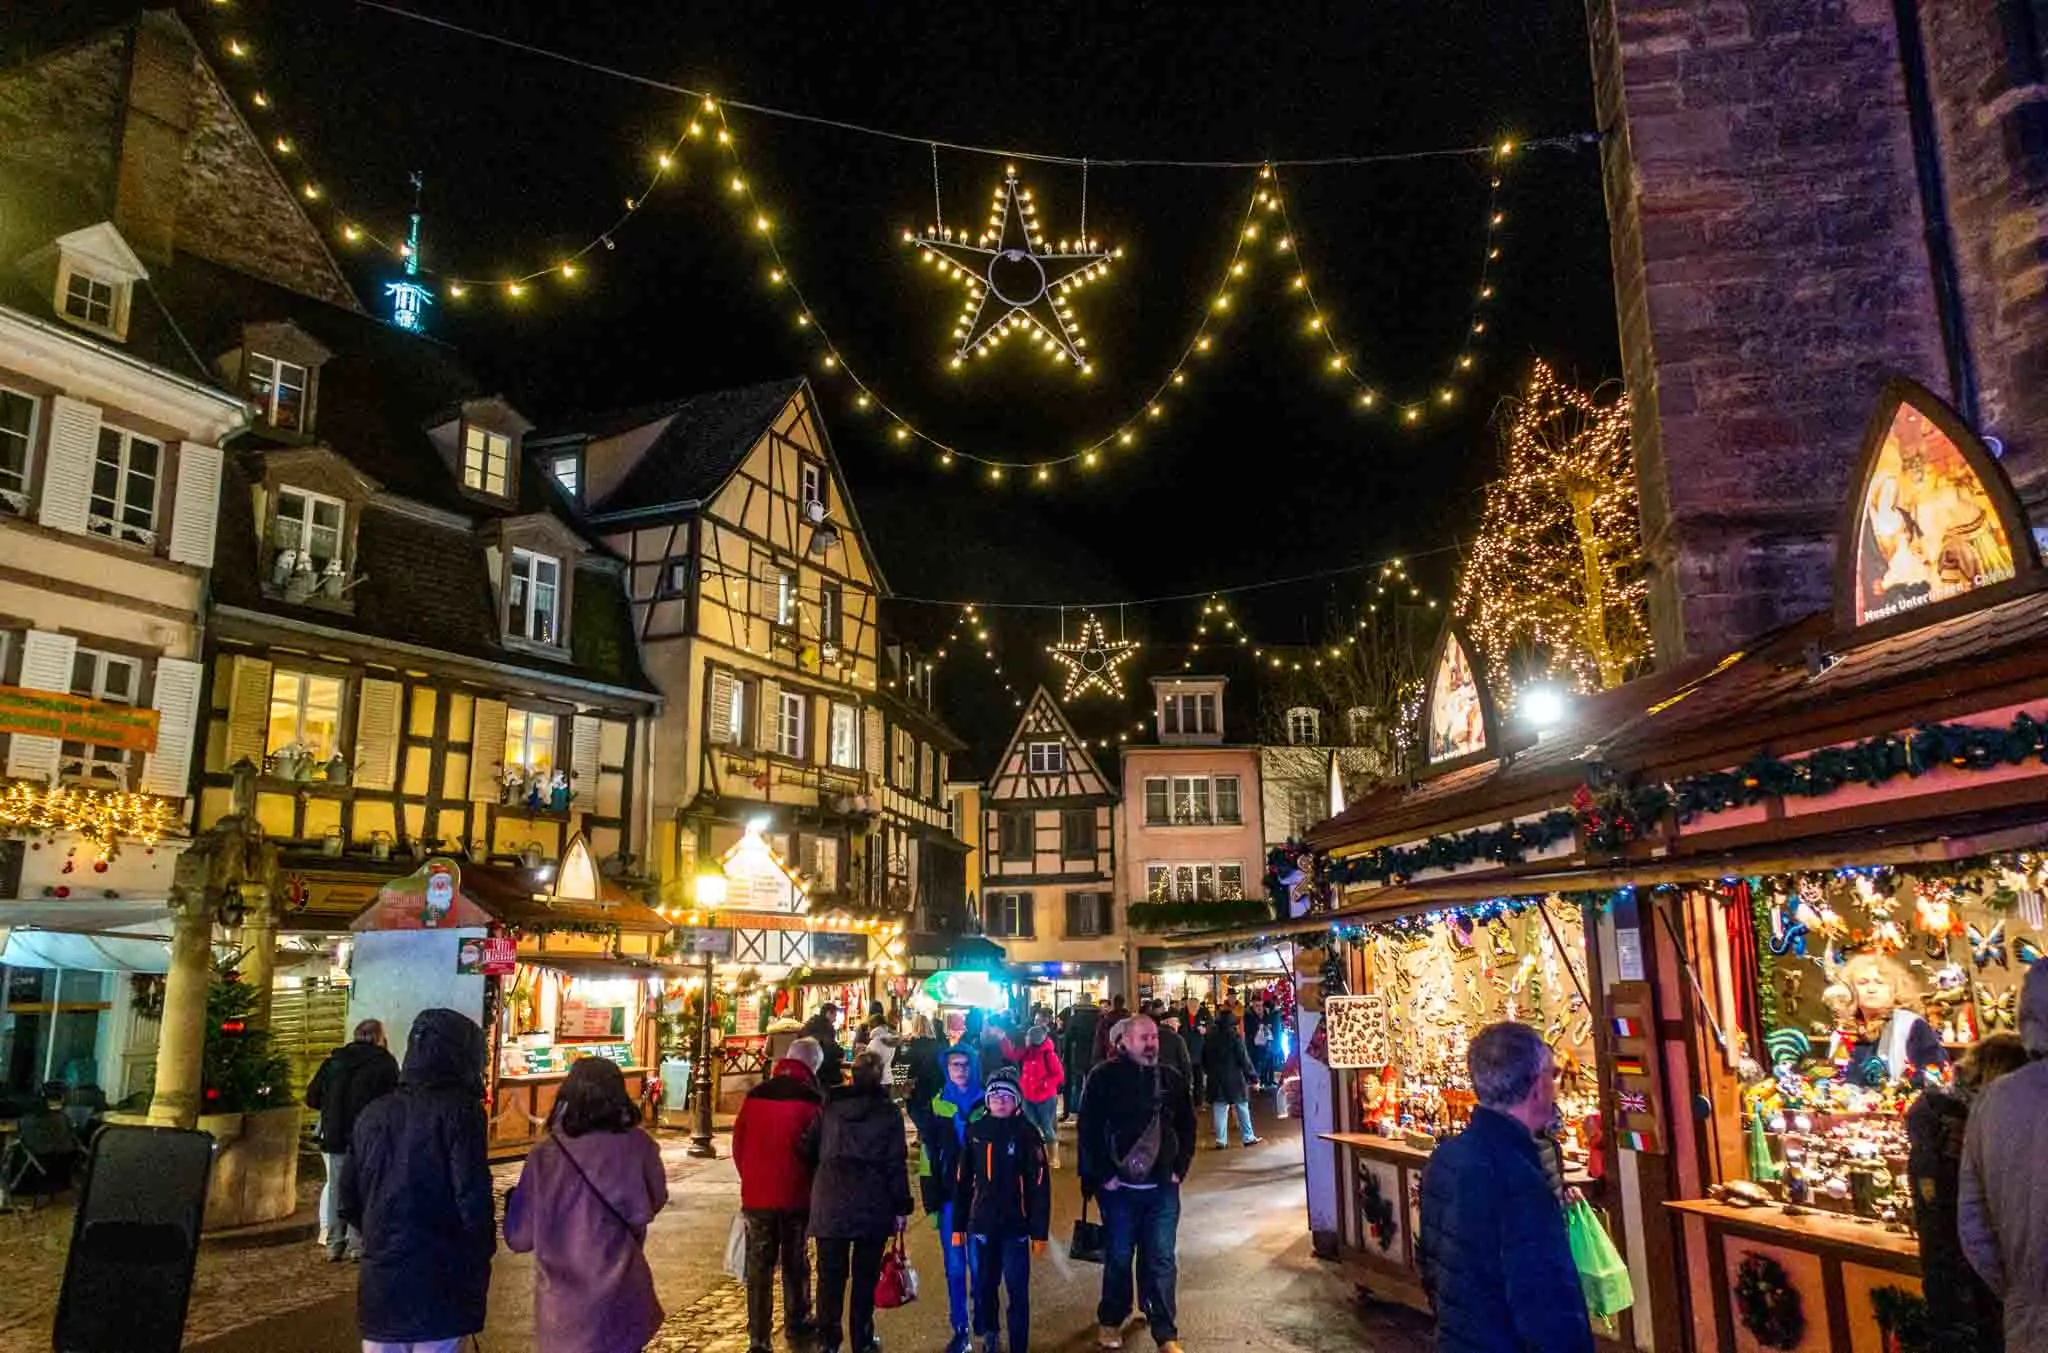 People shopping at market stalls under Christmas lights at night